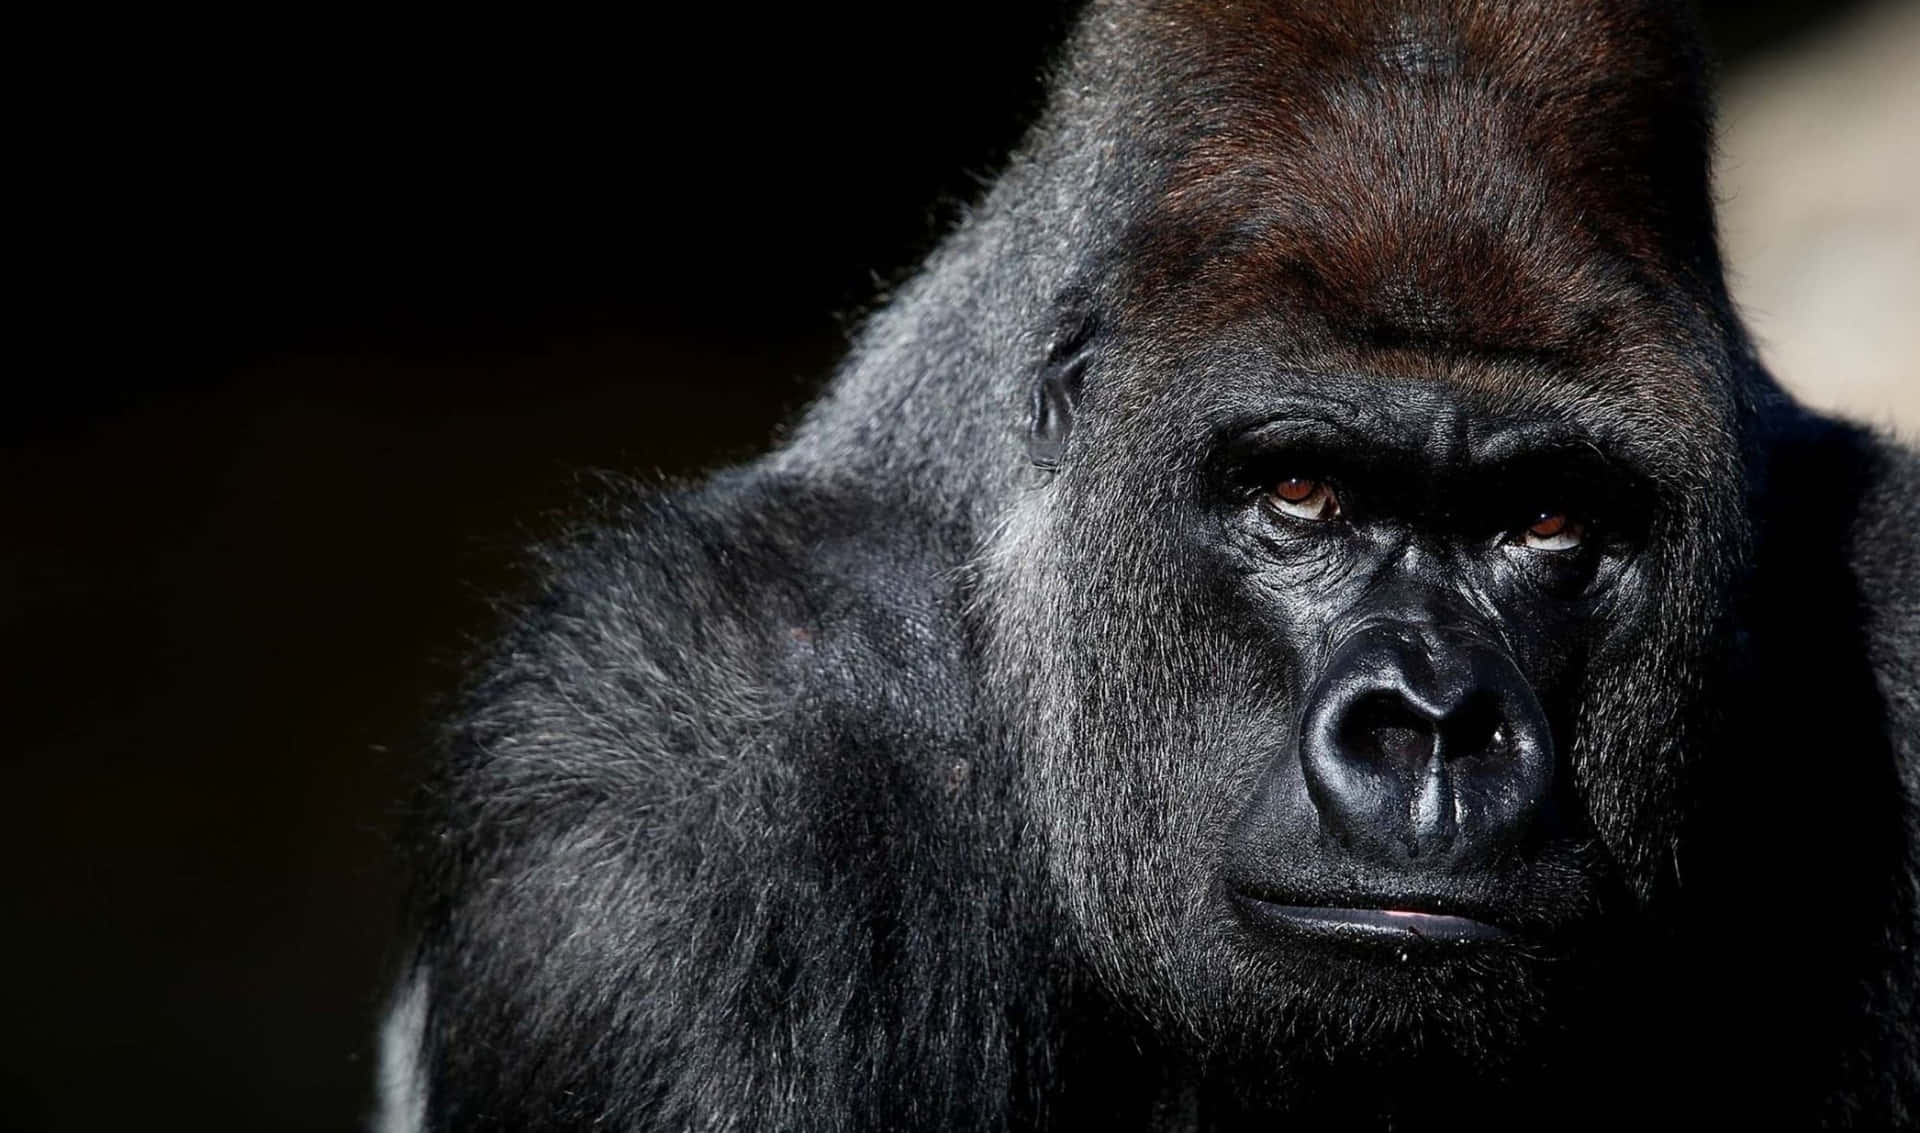 A Close-up of a Gorilla's Face